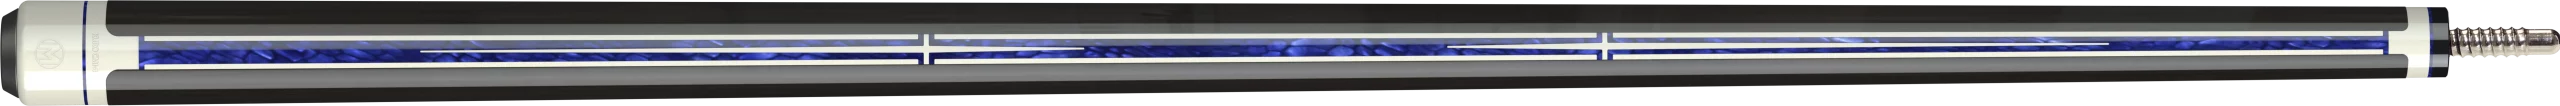 std 2024 - kuro - cmi-5 -blue snake - molinari billiards carbon cue - full